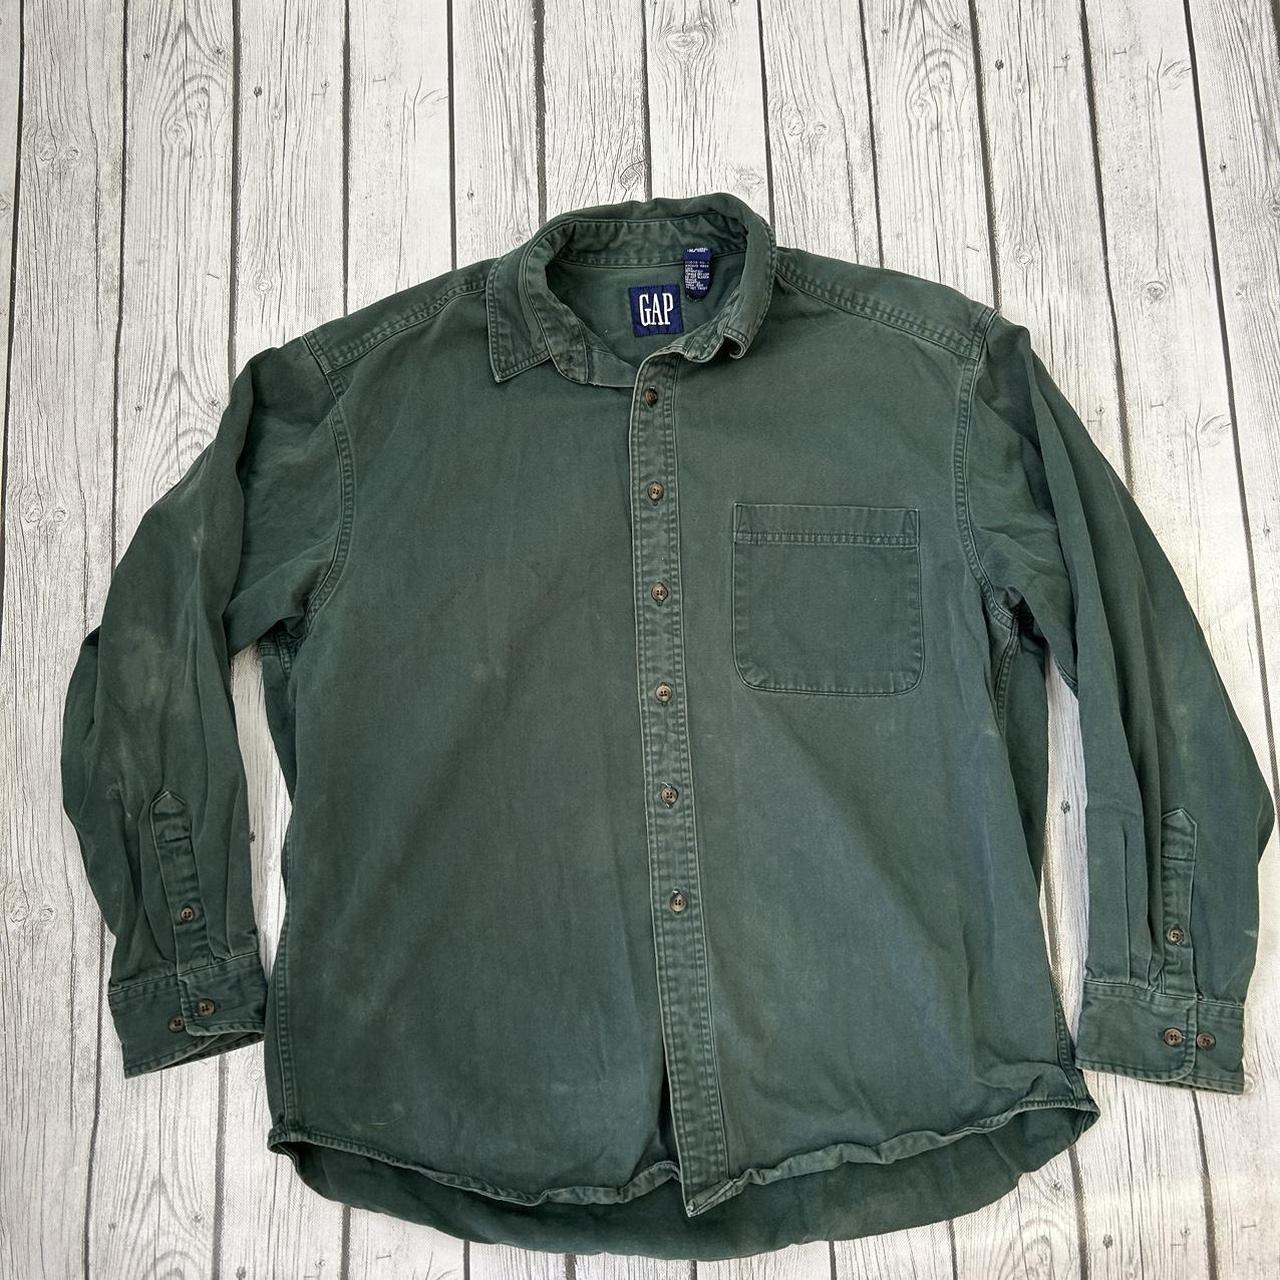 vintage 2000 gap forest green button-down shirt,... - Depop